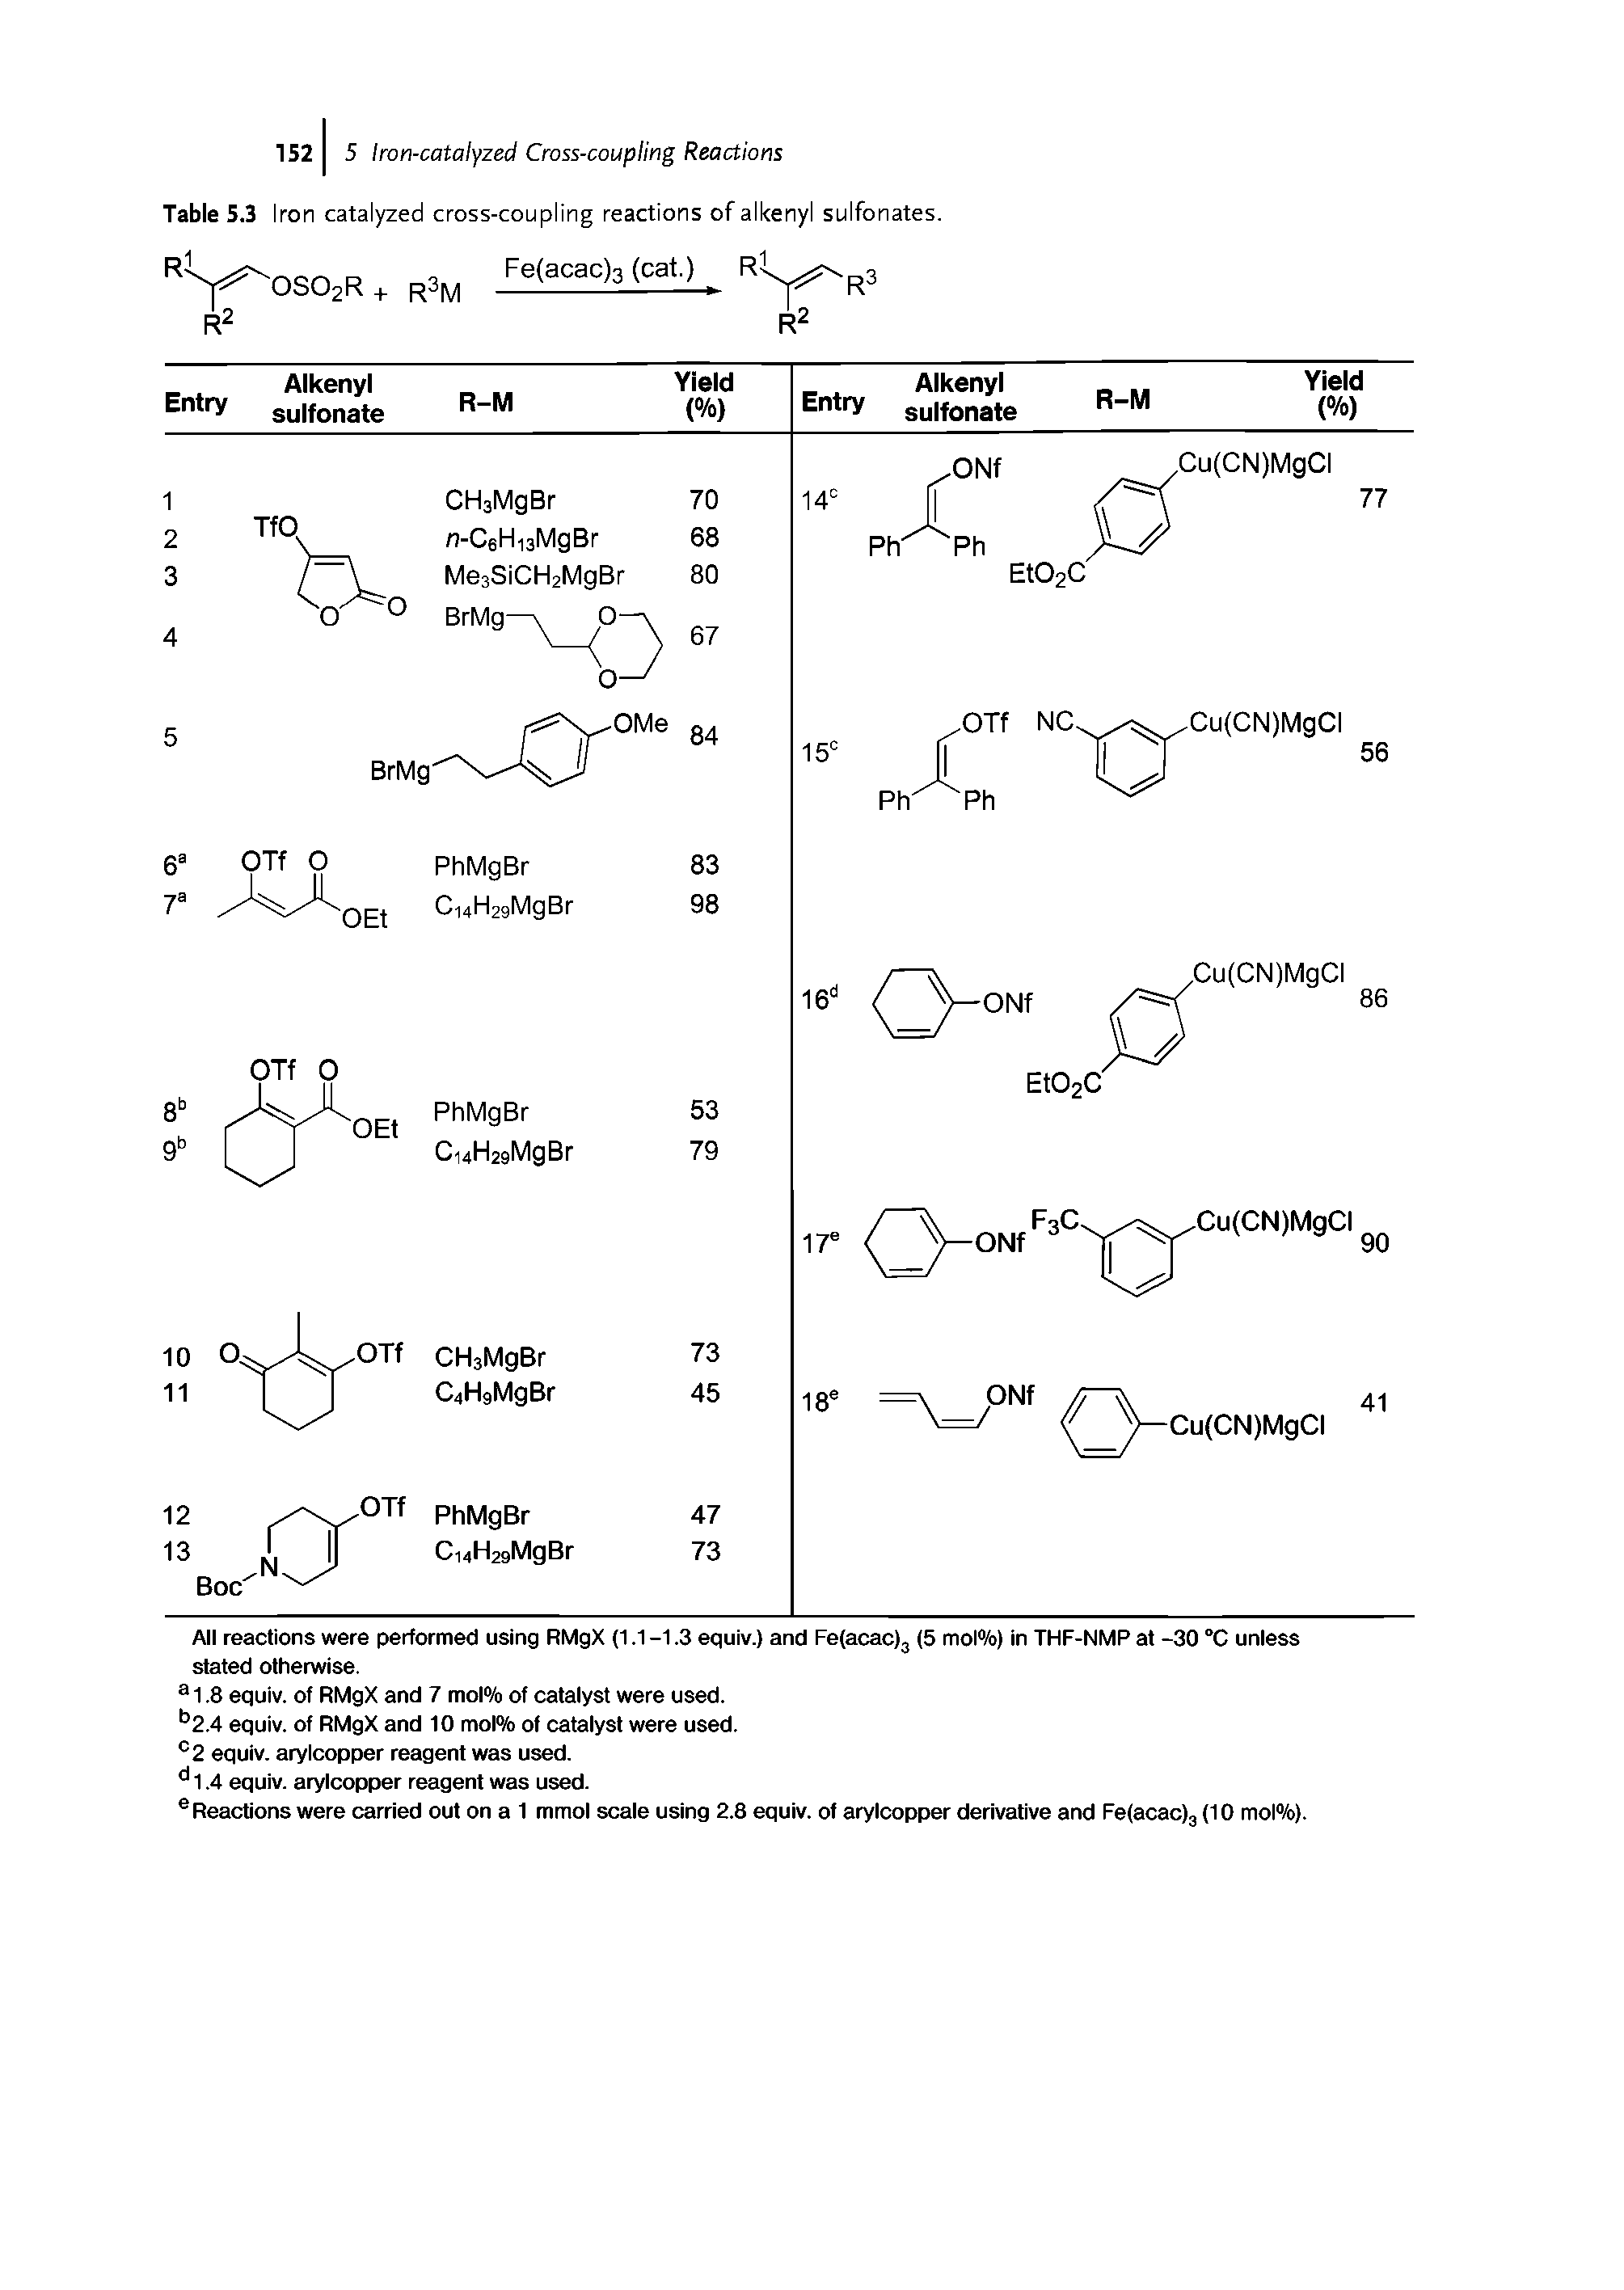 Table 5.3 Iron catalyzed cross-coupling reactions of alkenyl sulfonates.